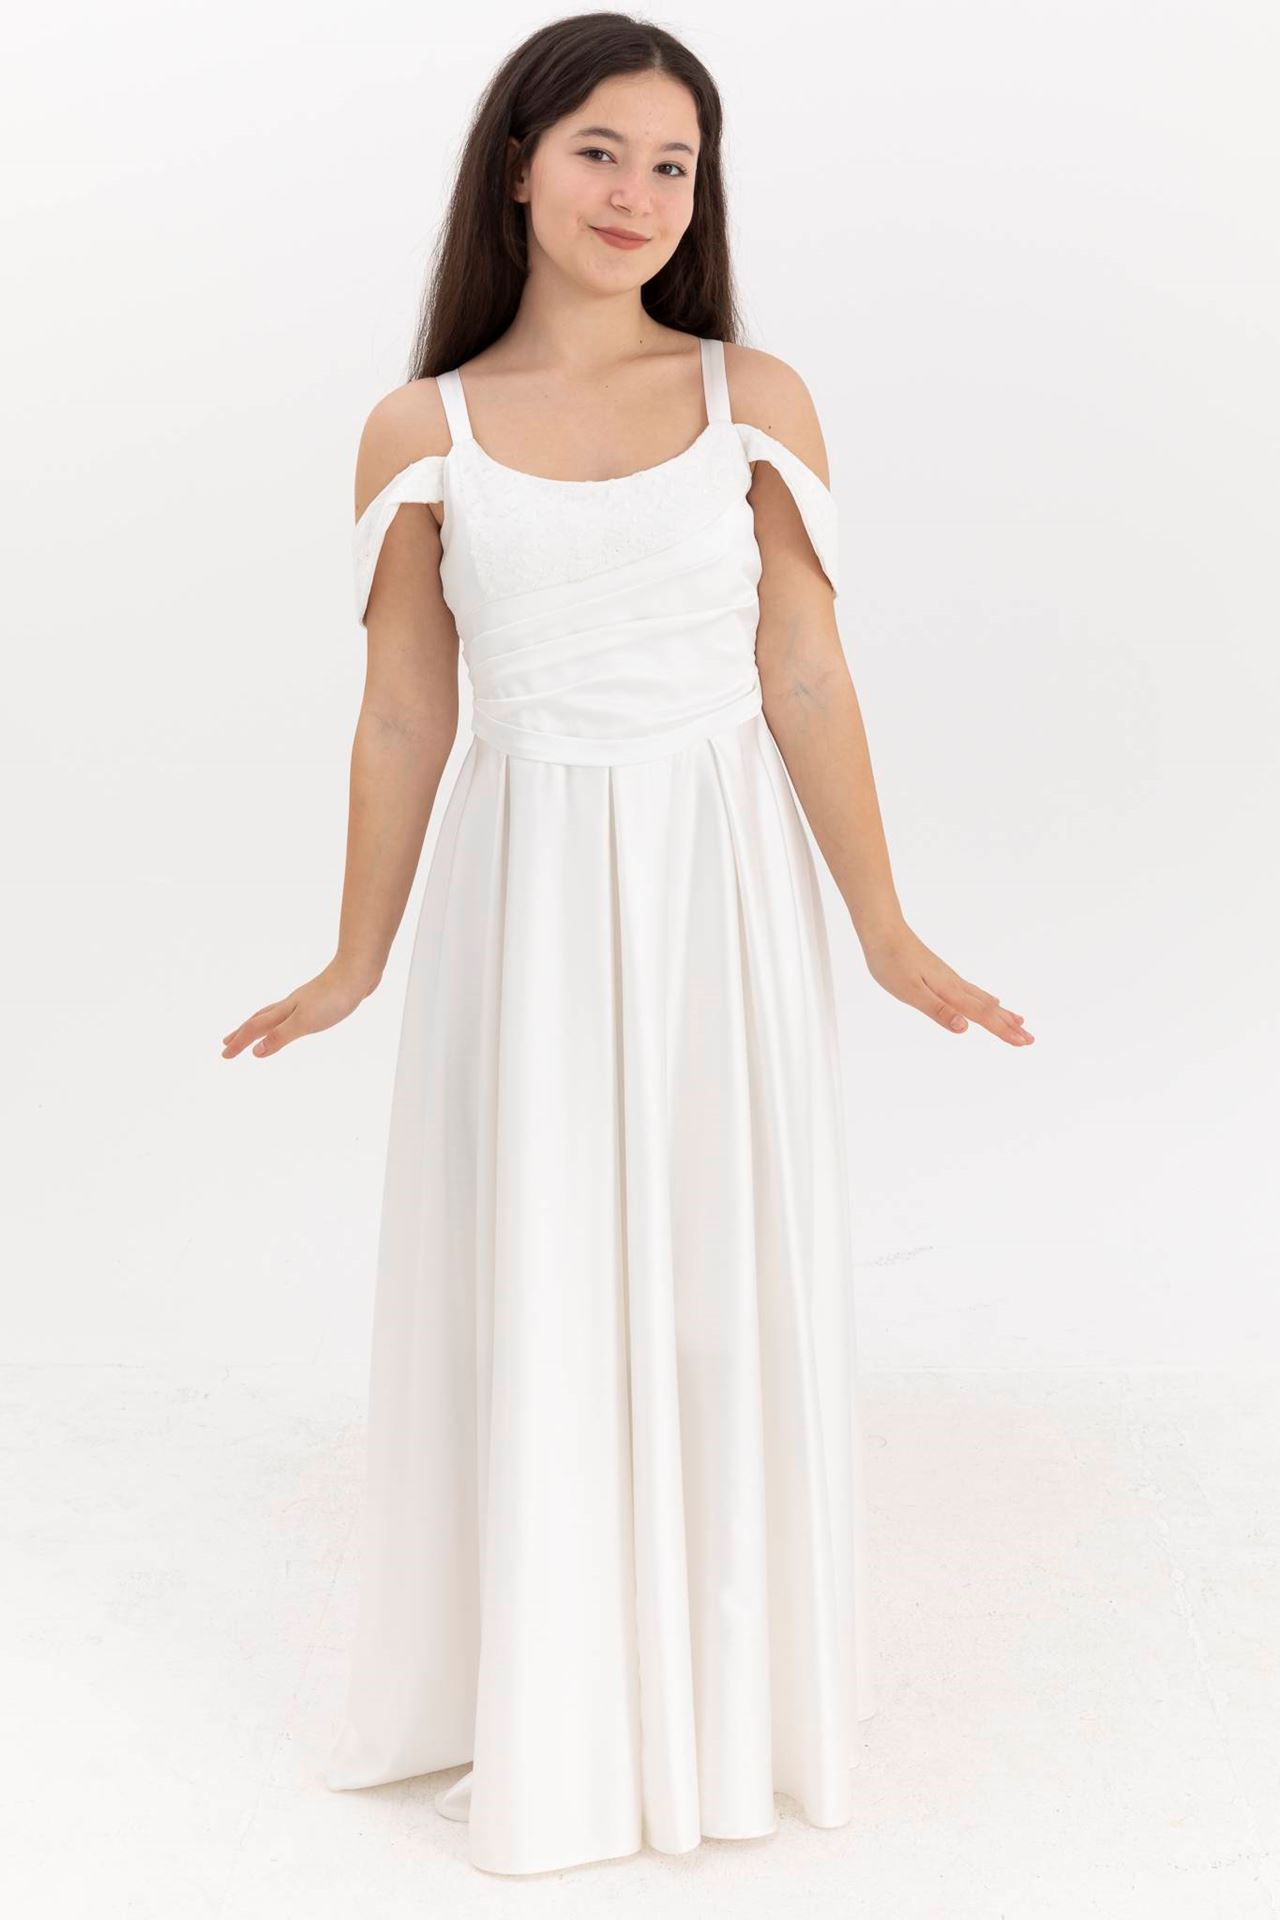 Aquamarine 12-16 Years Old Girl Dress 50004 Off White